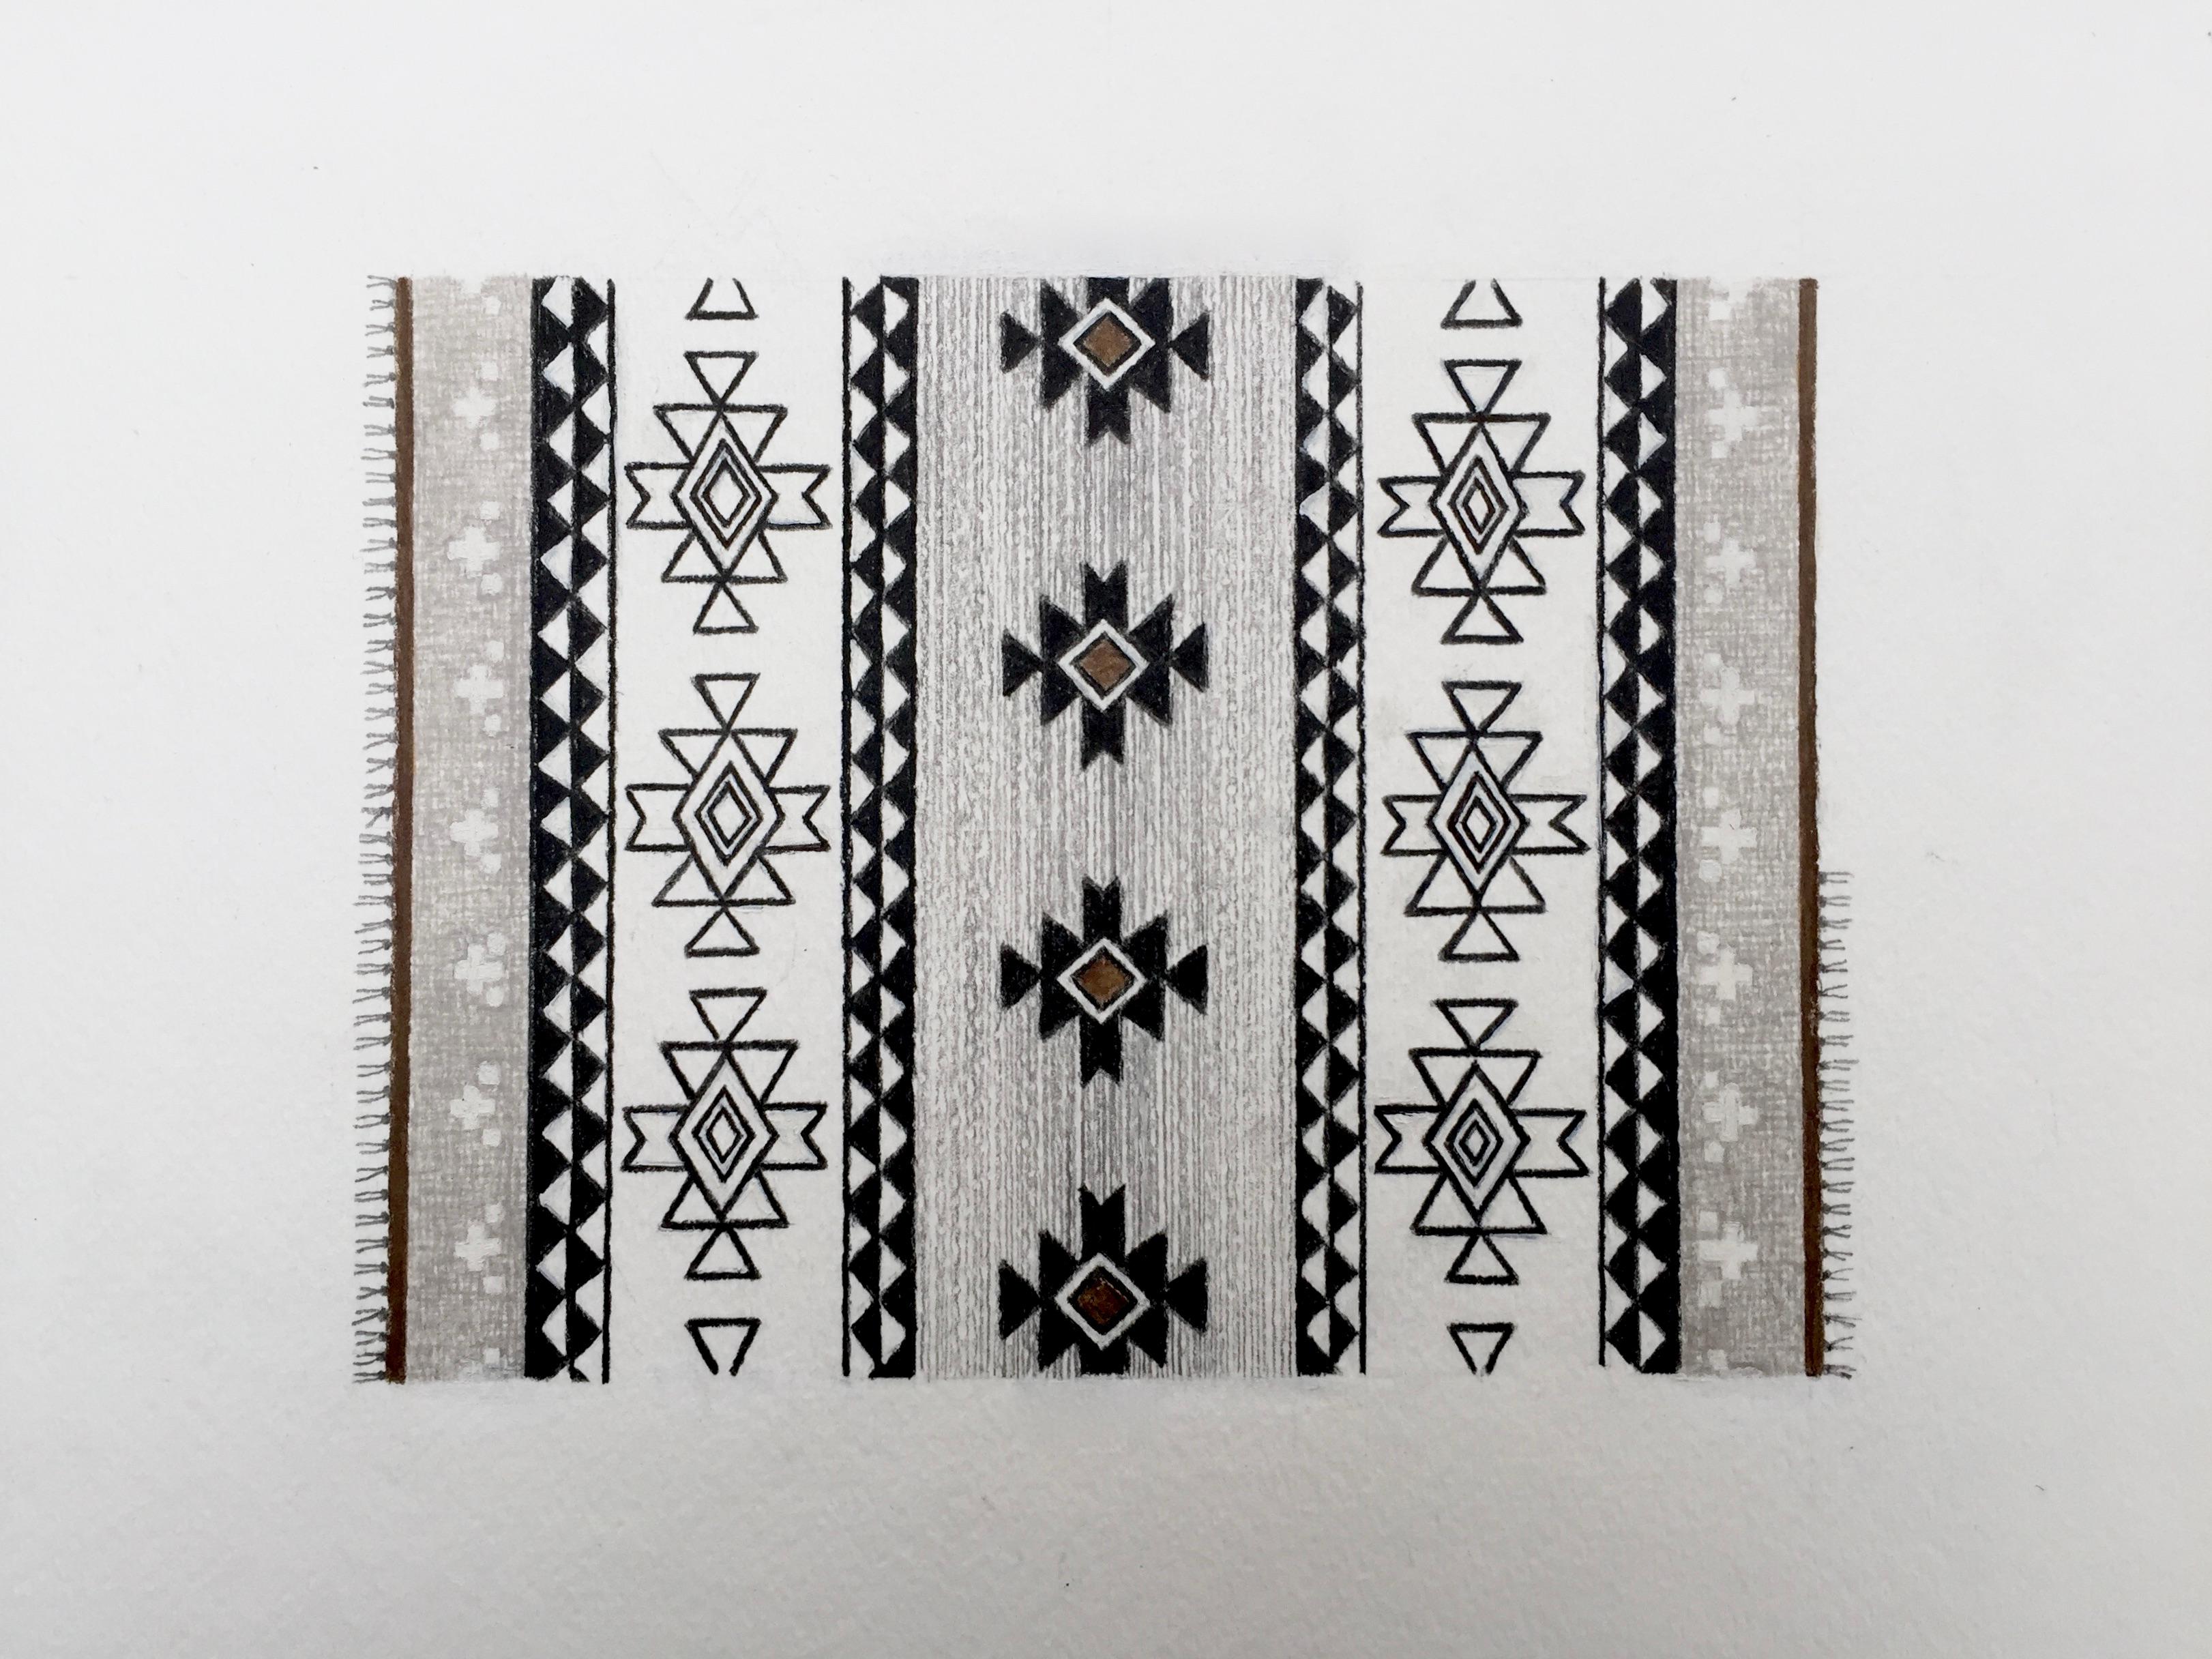 Magic Carpet Ride 2 (9"x12" Navajo Rug Art, Geometric, Black, White, Brown)